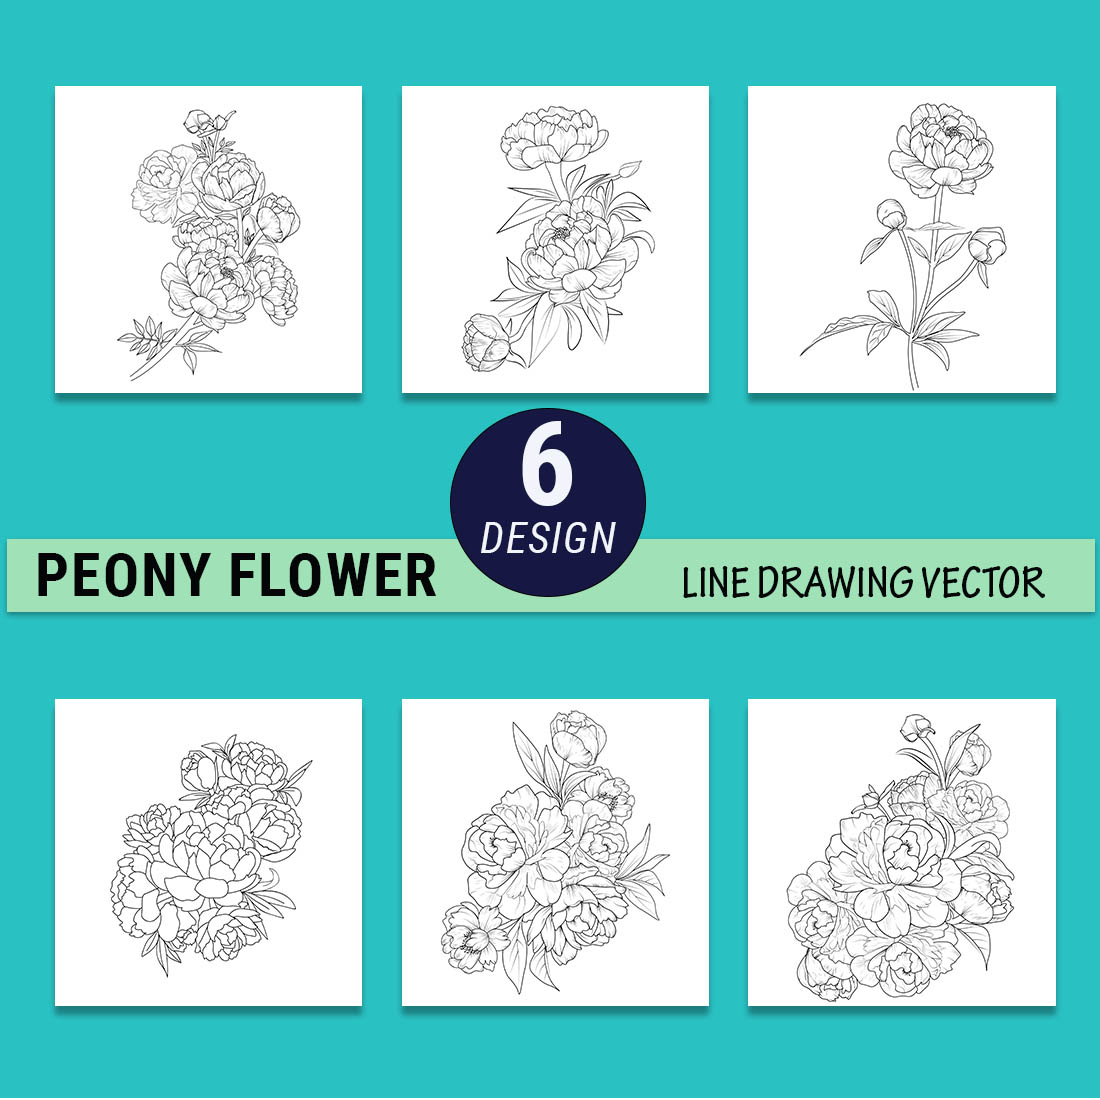 Peony flower line art, peony line drawing tattoo, linework peony tattoo design, scientific peony botanical illustration Peony flower sketch art preview image.